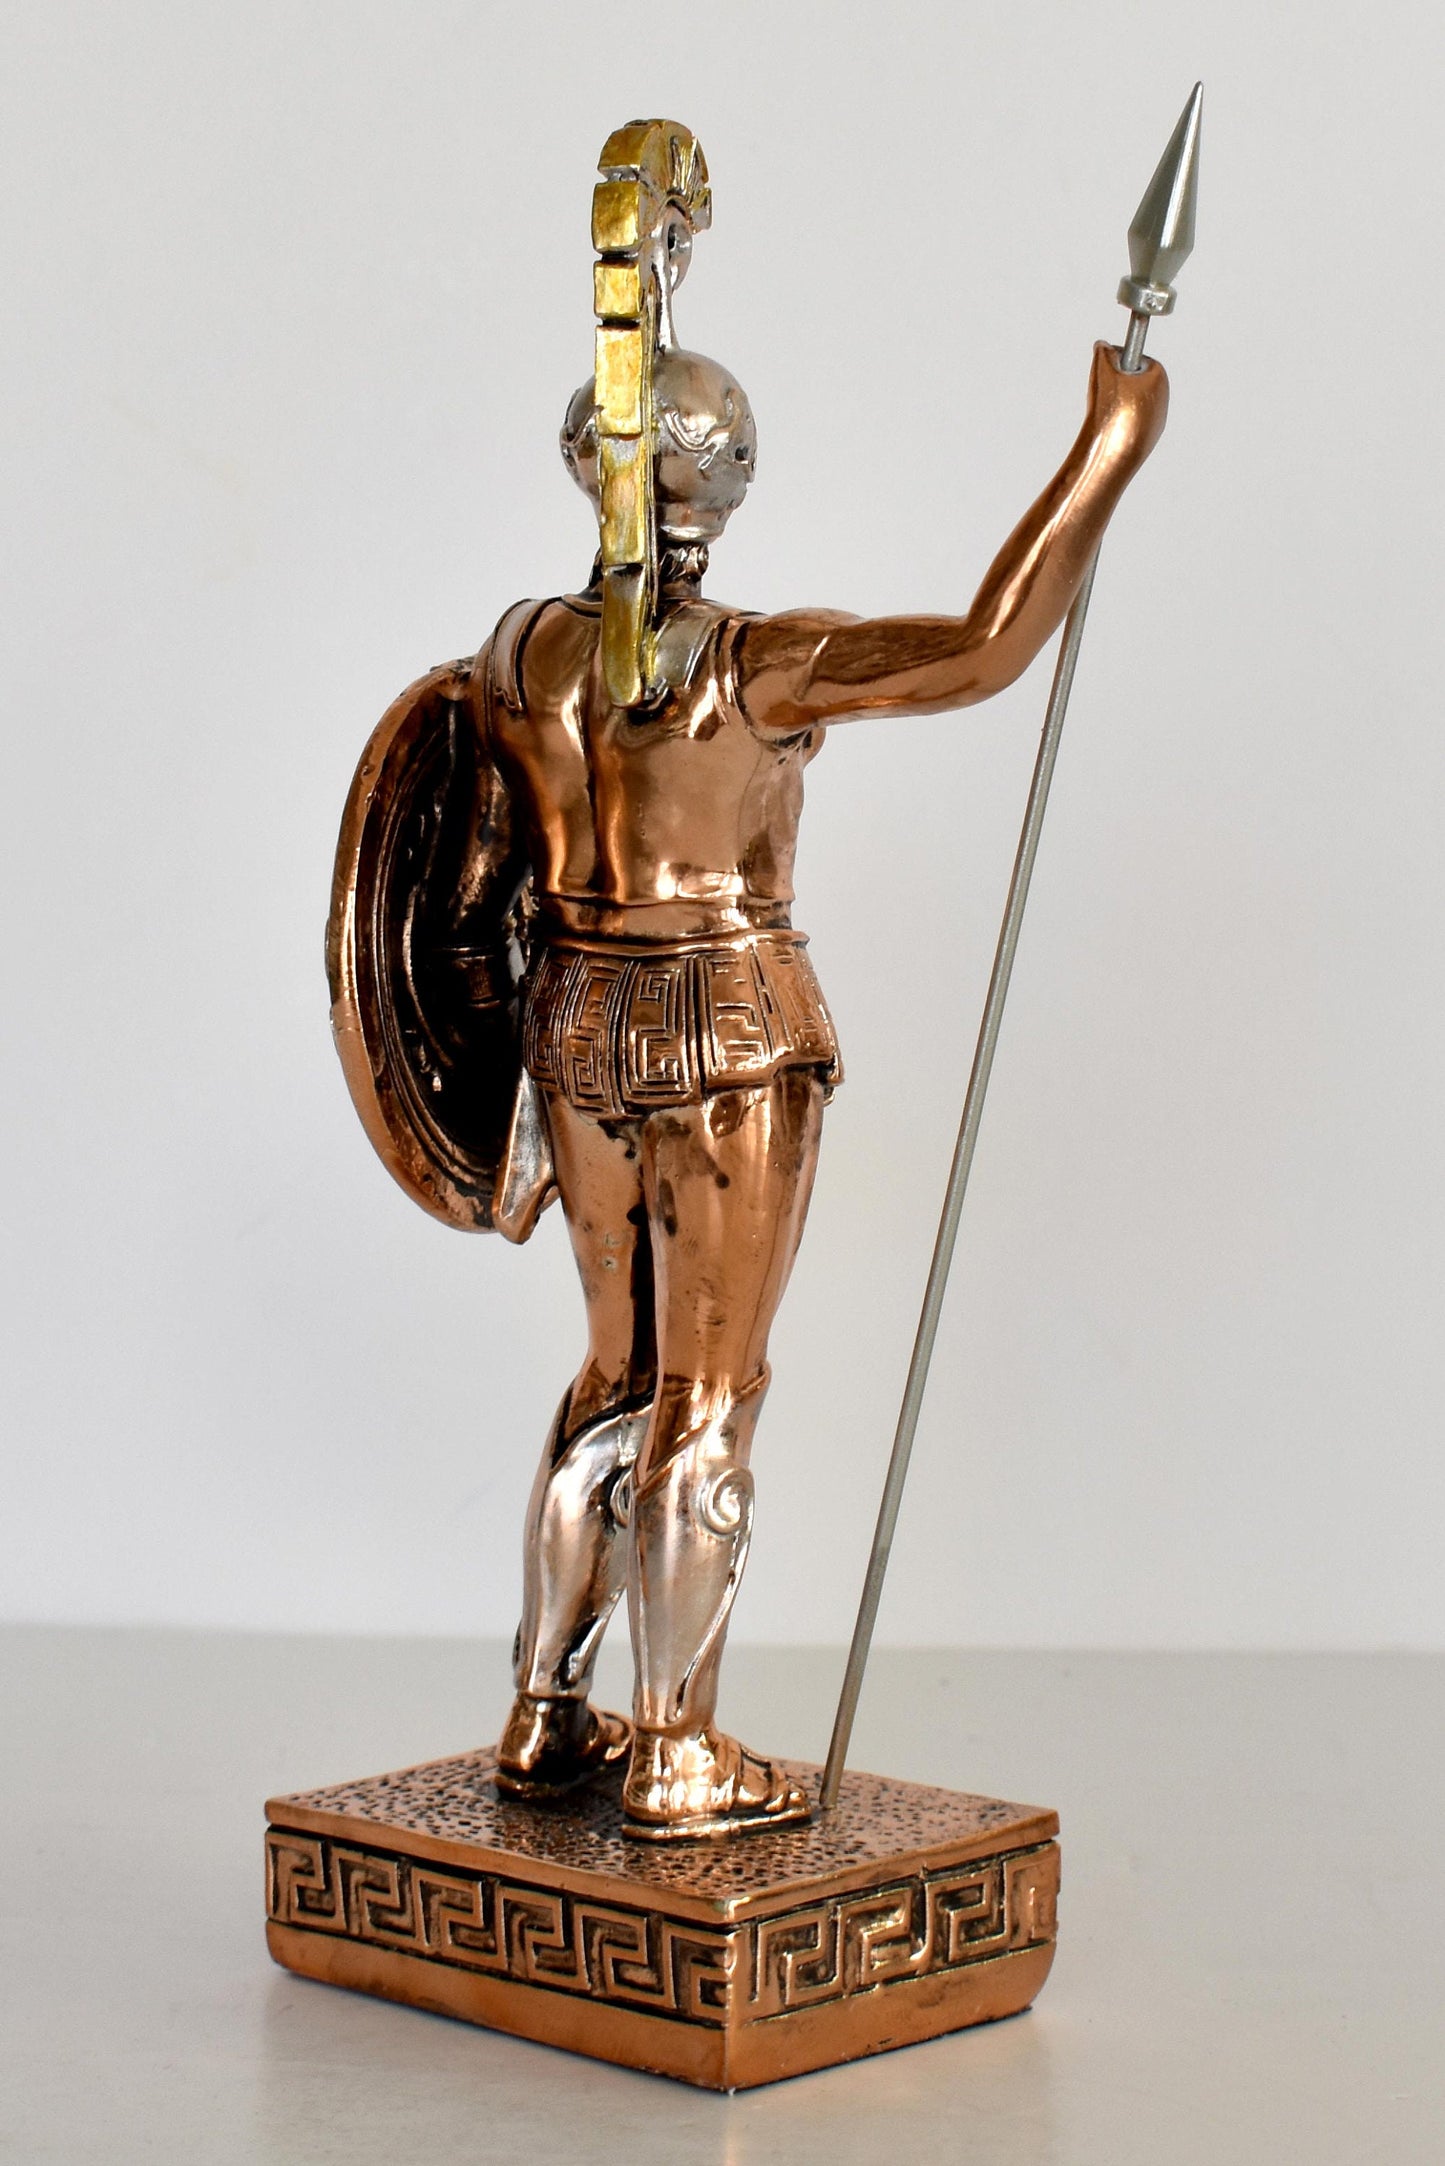 Achilles - King of the Myrmidons - Greek Hero - The best fighter on the side of the Greeks - Trojan War,  Iliad  - Copper Plated Alabaster